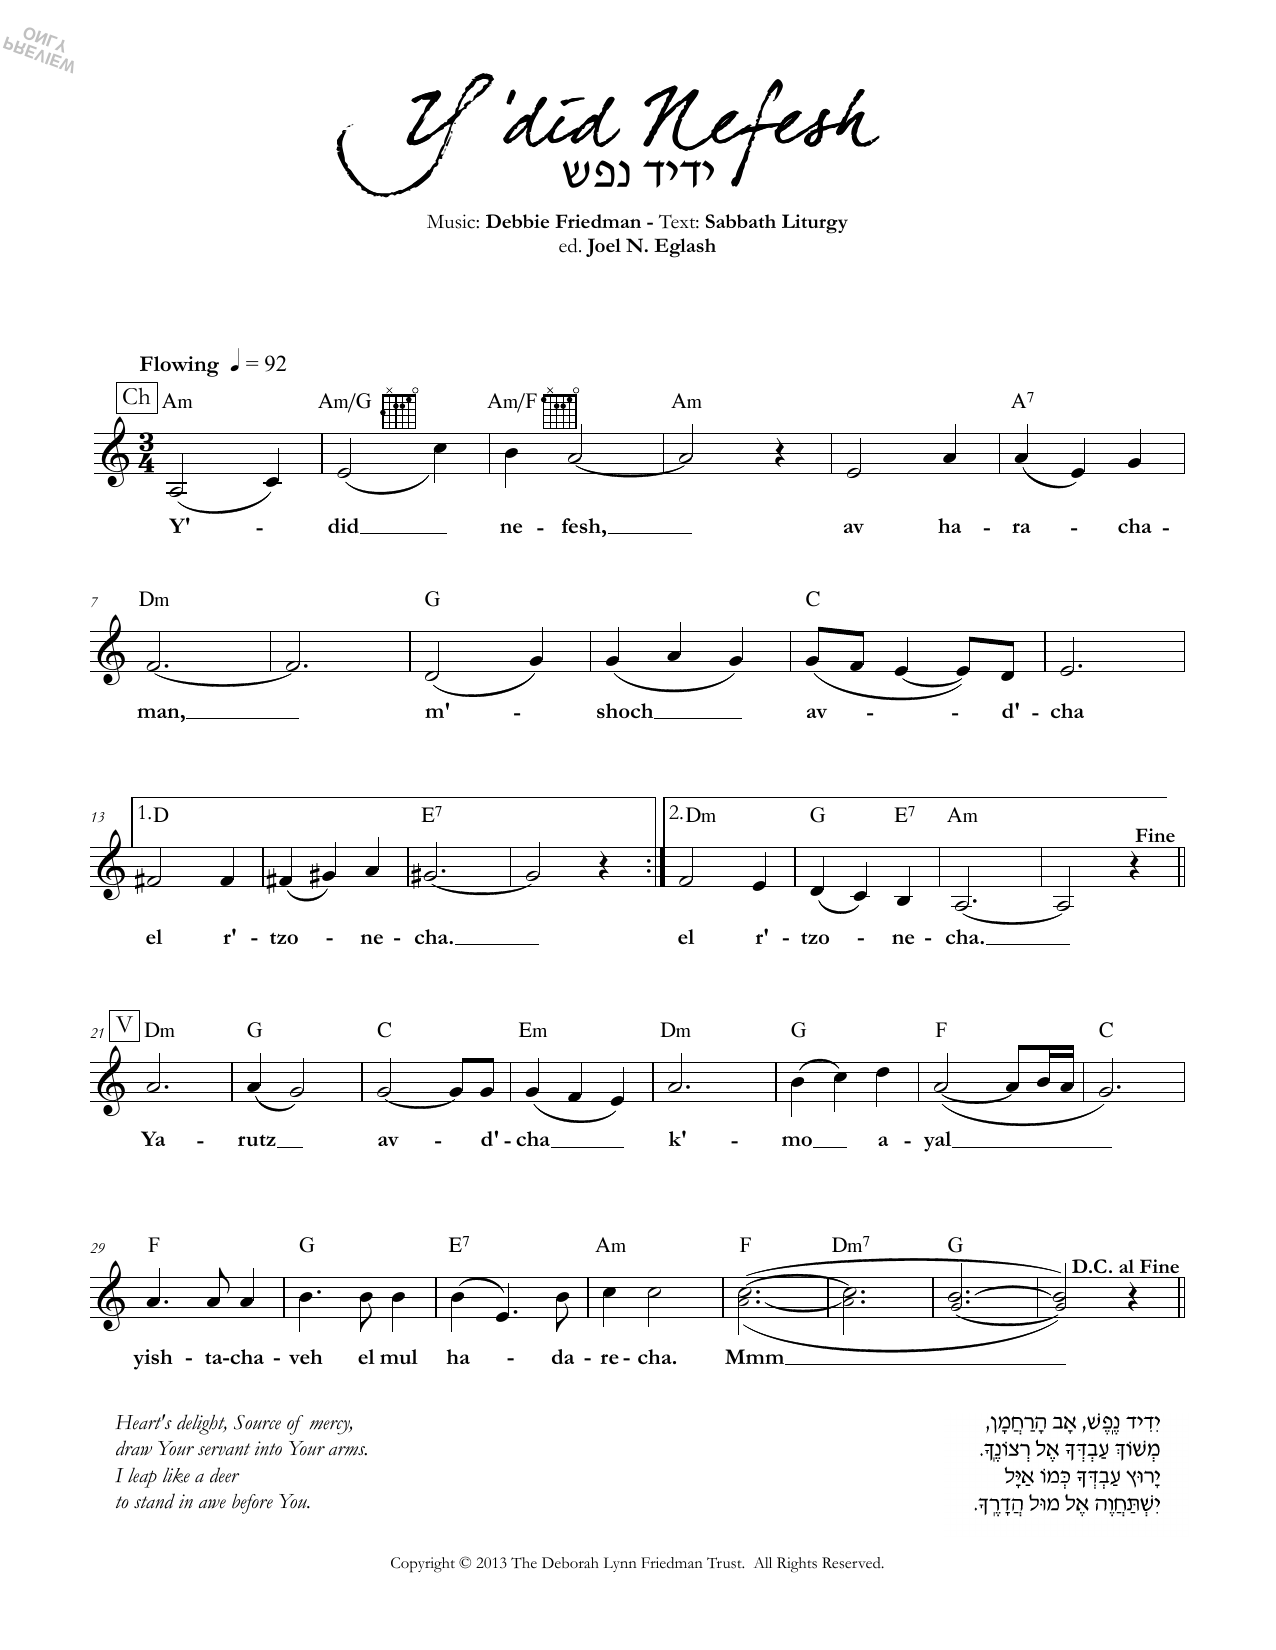 Debbie Friedman Y'did Nefesh Sheet Music Notes & Chords for Lead Sheet / Fake Book - Download or Print PDF